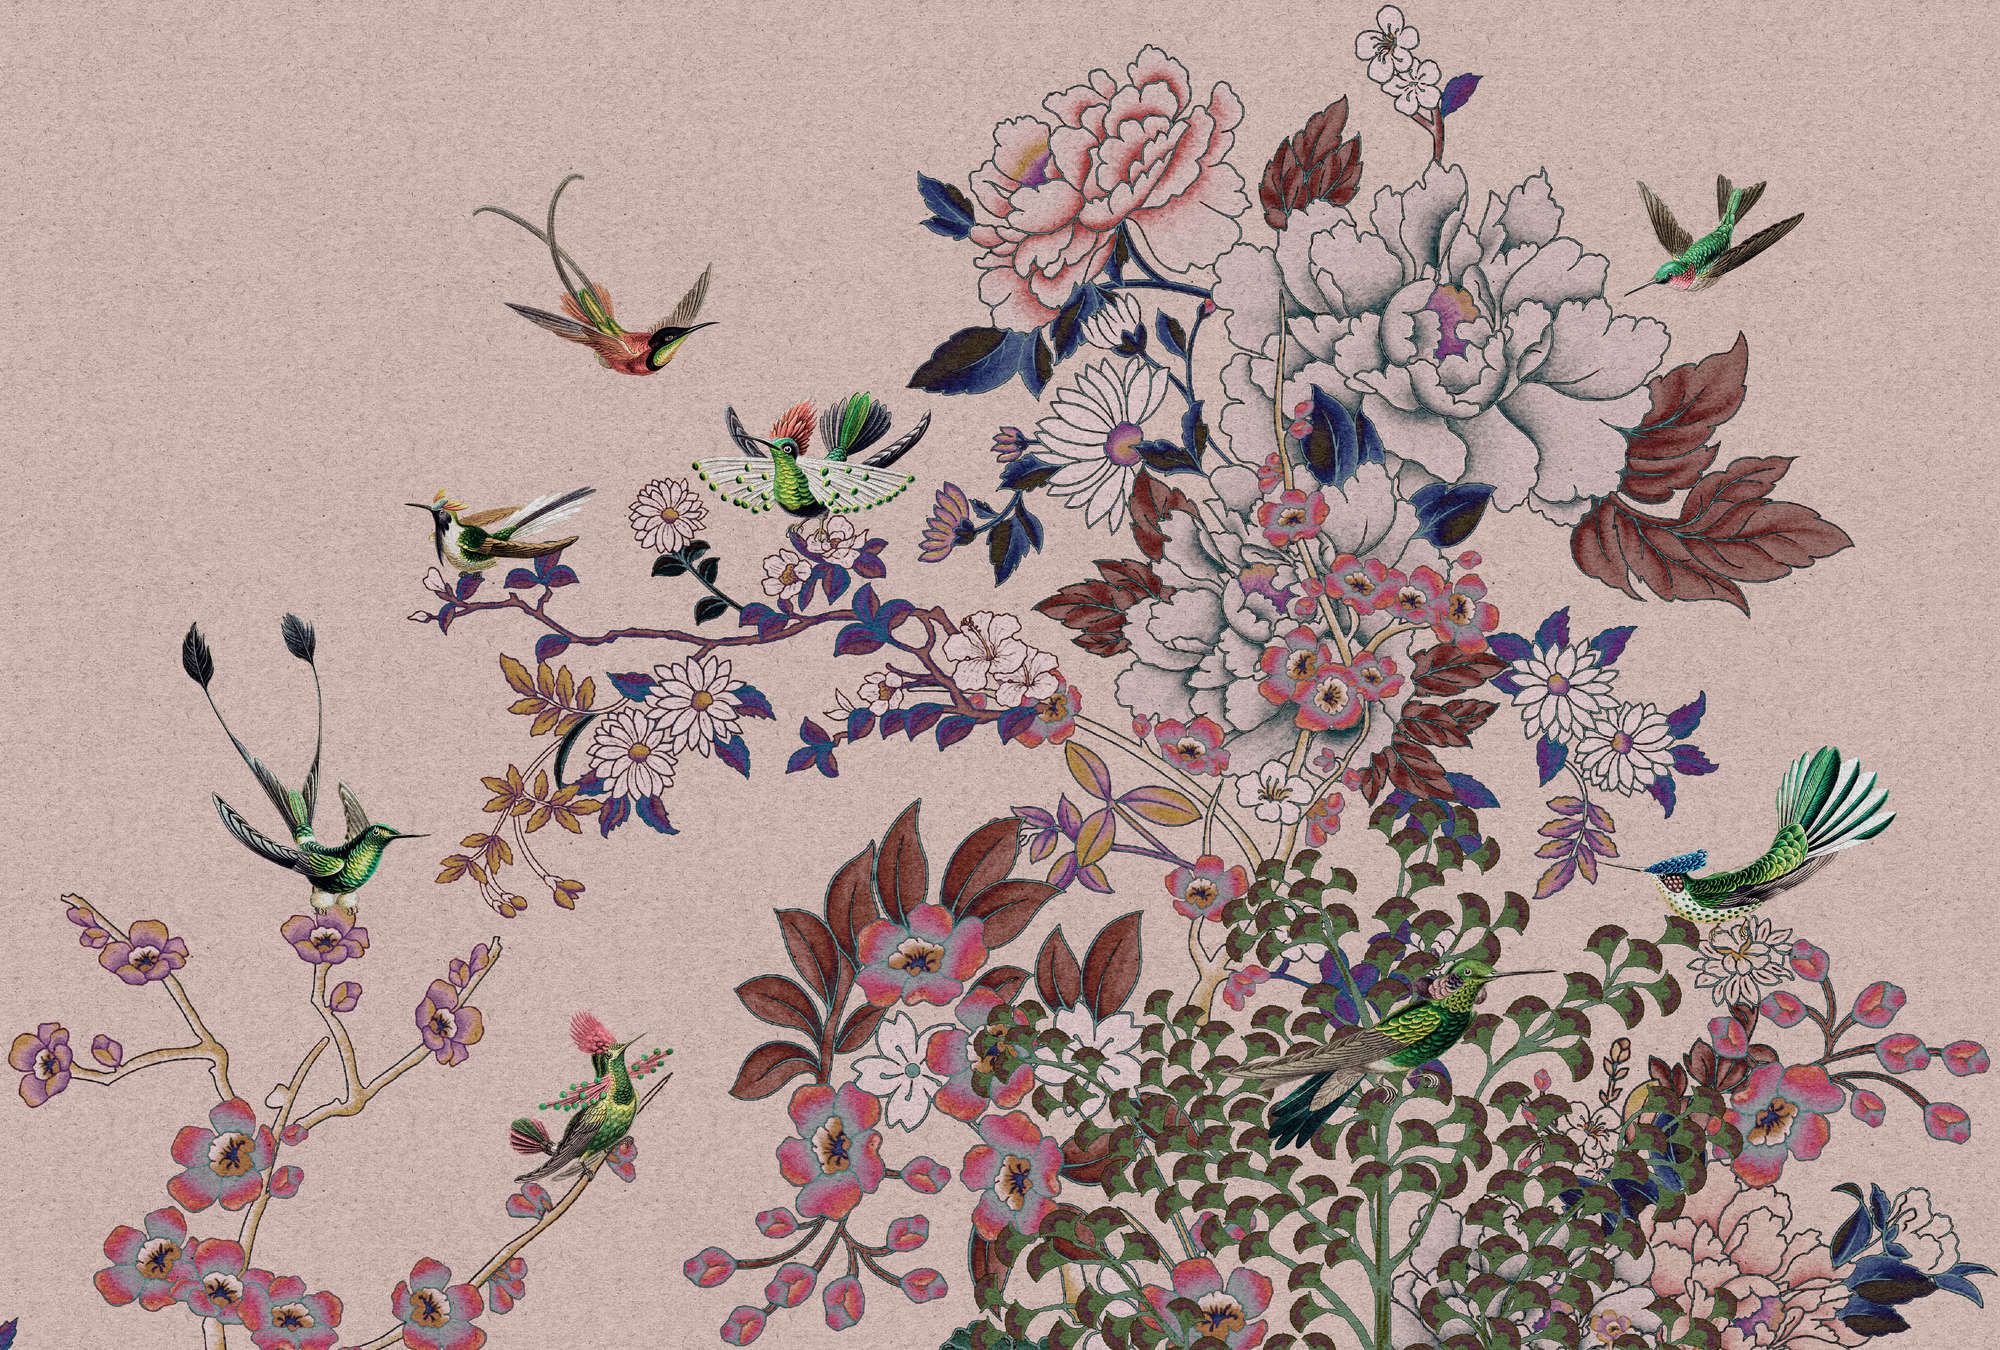             Fotomural »madras 2« - Motivo floral de color rosa con colibríes sobre textura de papel kraft - Material sin tejer liso, ligeramente nacarado
        